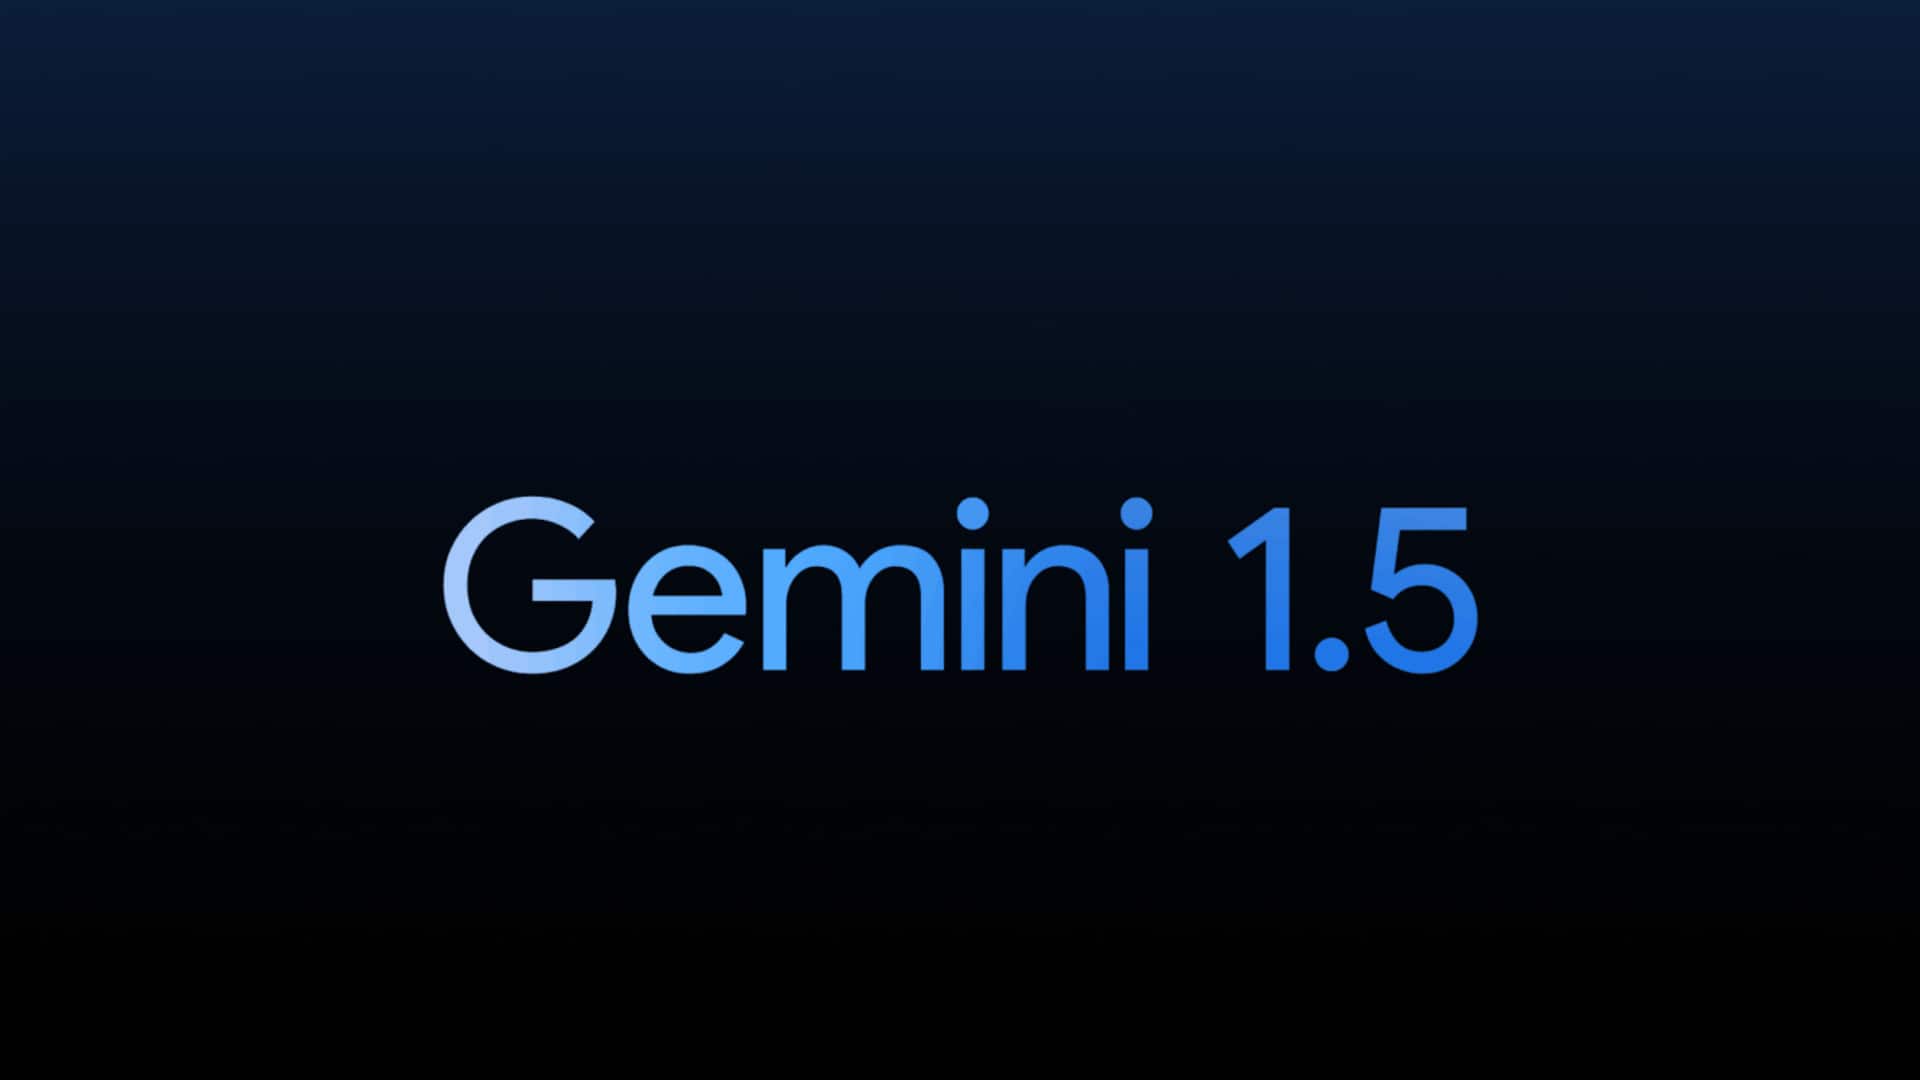 How Google's Gemini 1.5 AI model fares against its predecessor